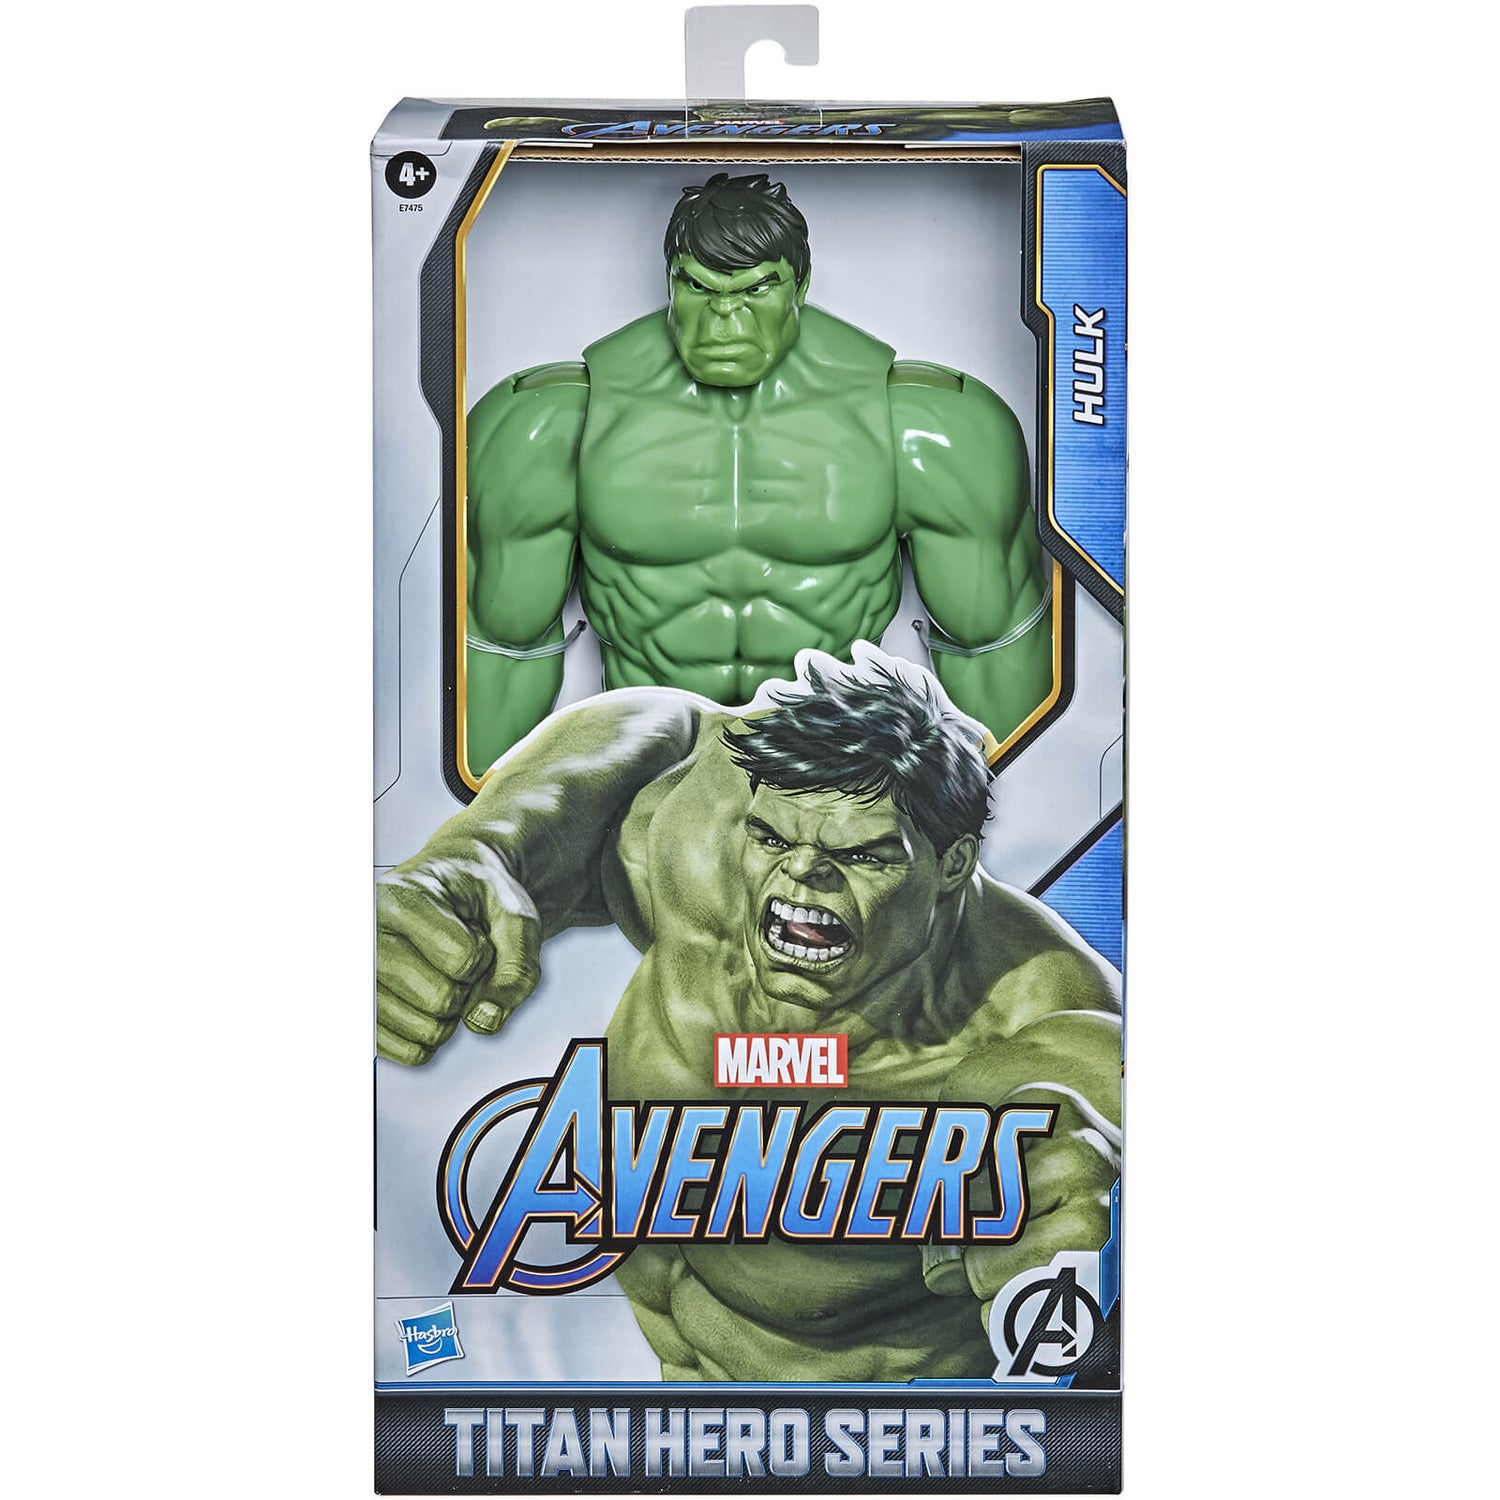 Hasbro Marvel Avengers Titan Hero Series - Hulk Action Figure